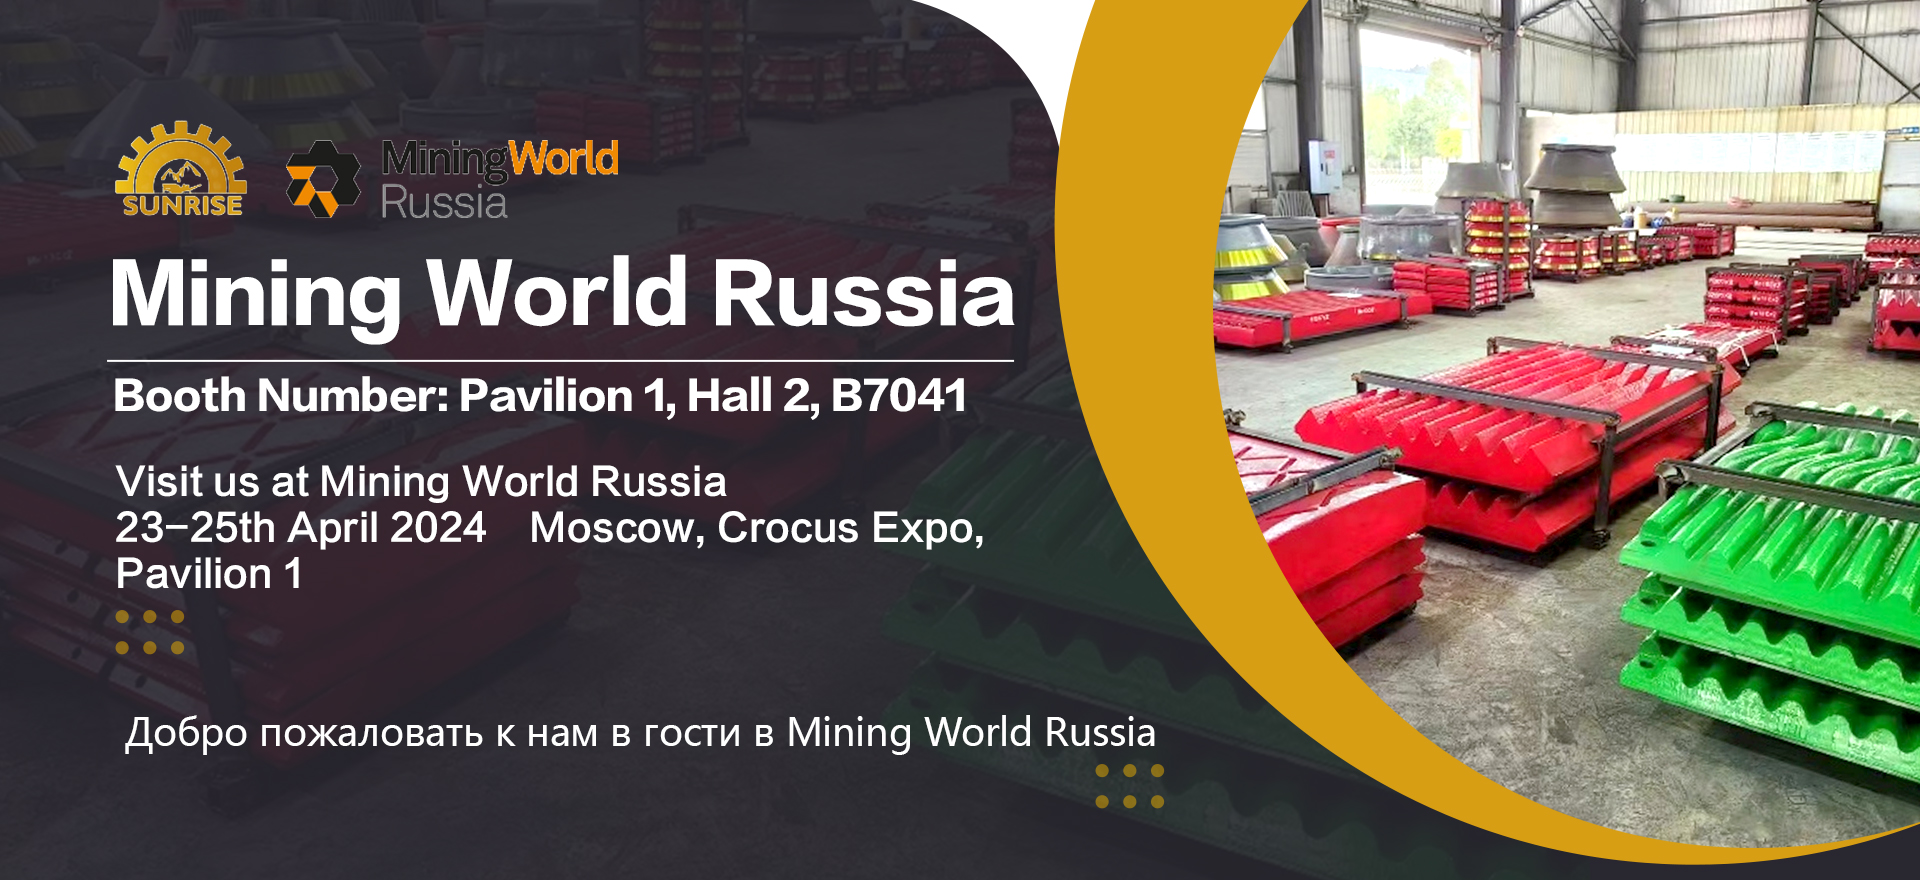 Sunrise Mining World Russland